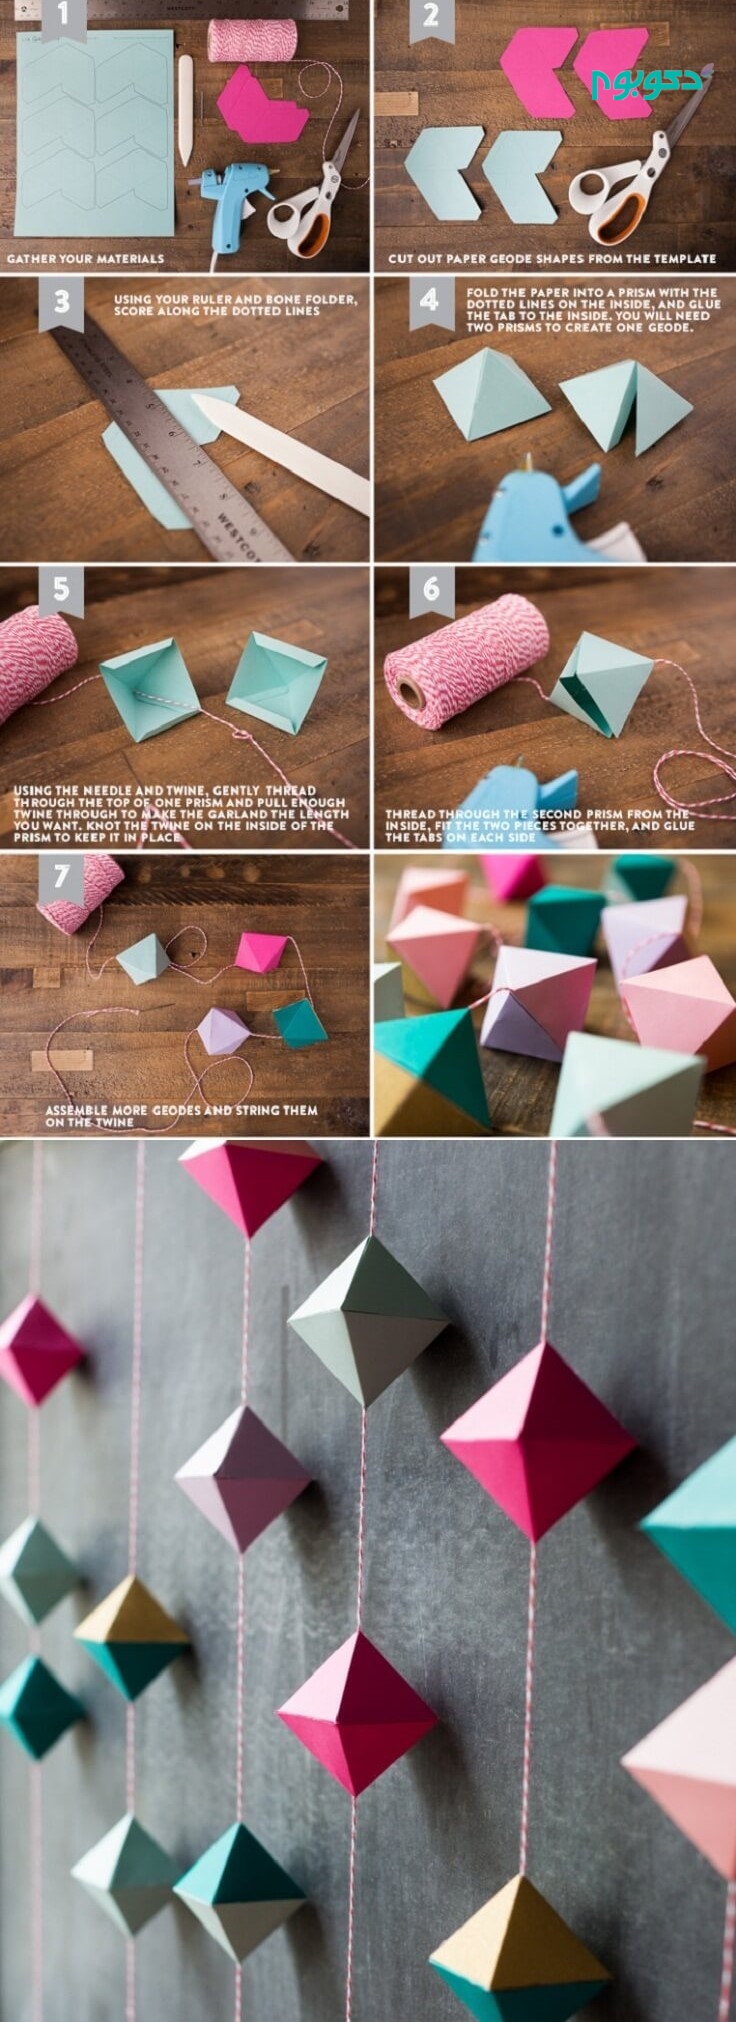 08-paper-decor-crafts-ideas-homebnc.jpg